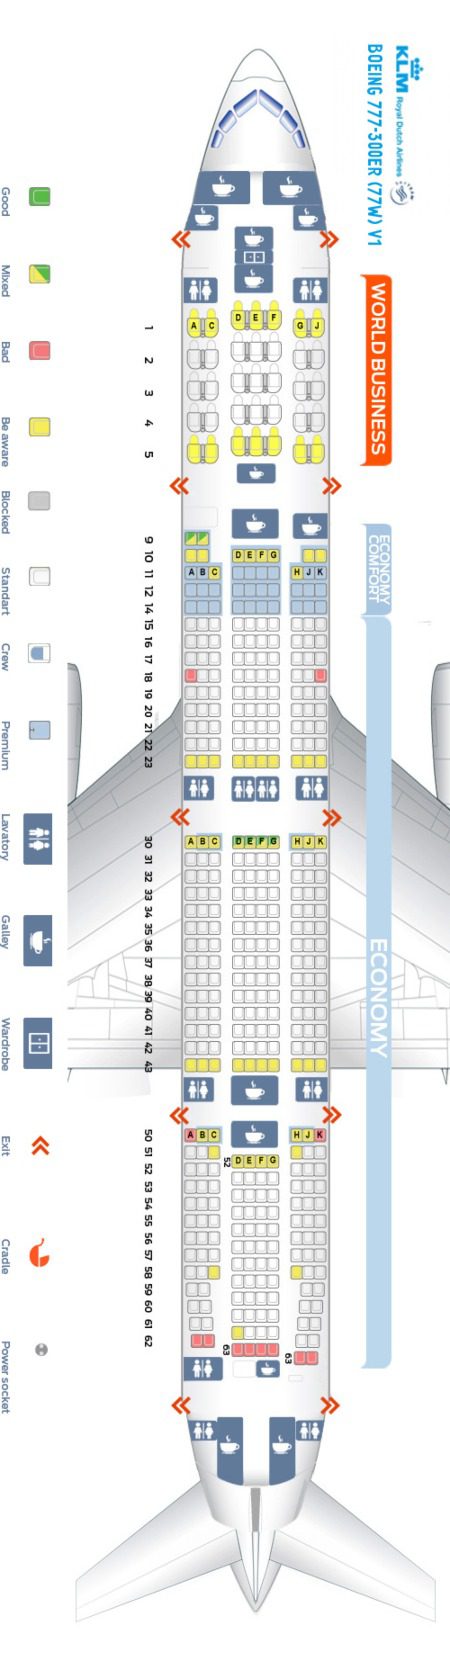 KLM 777-300 naar Curacao - stoelindeling